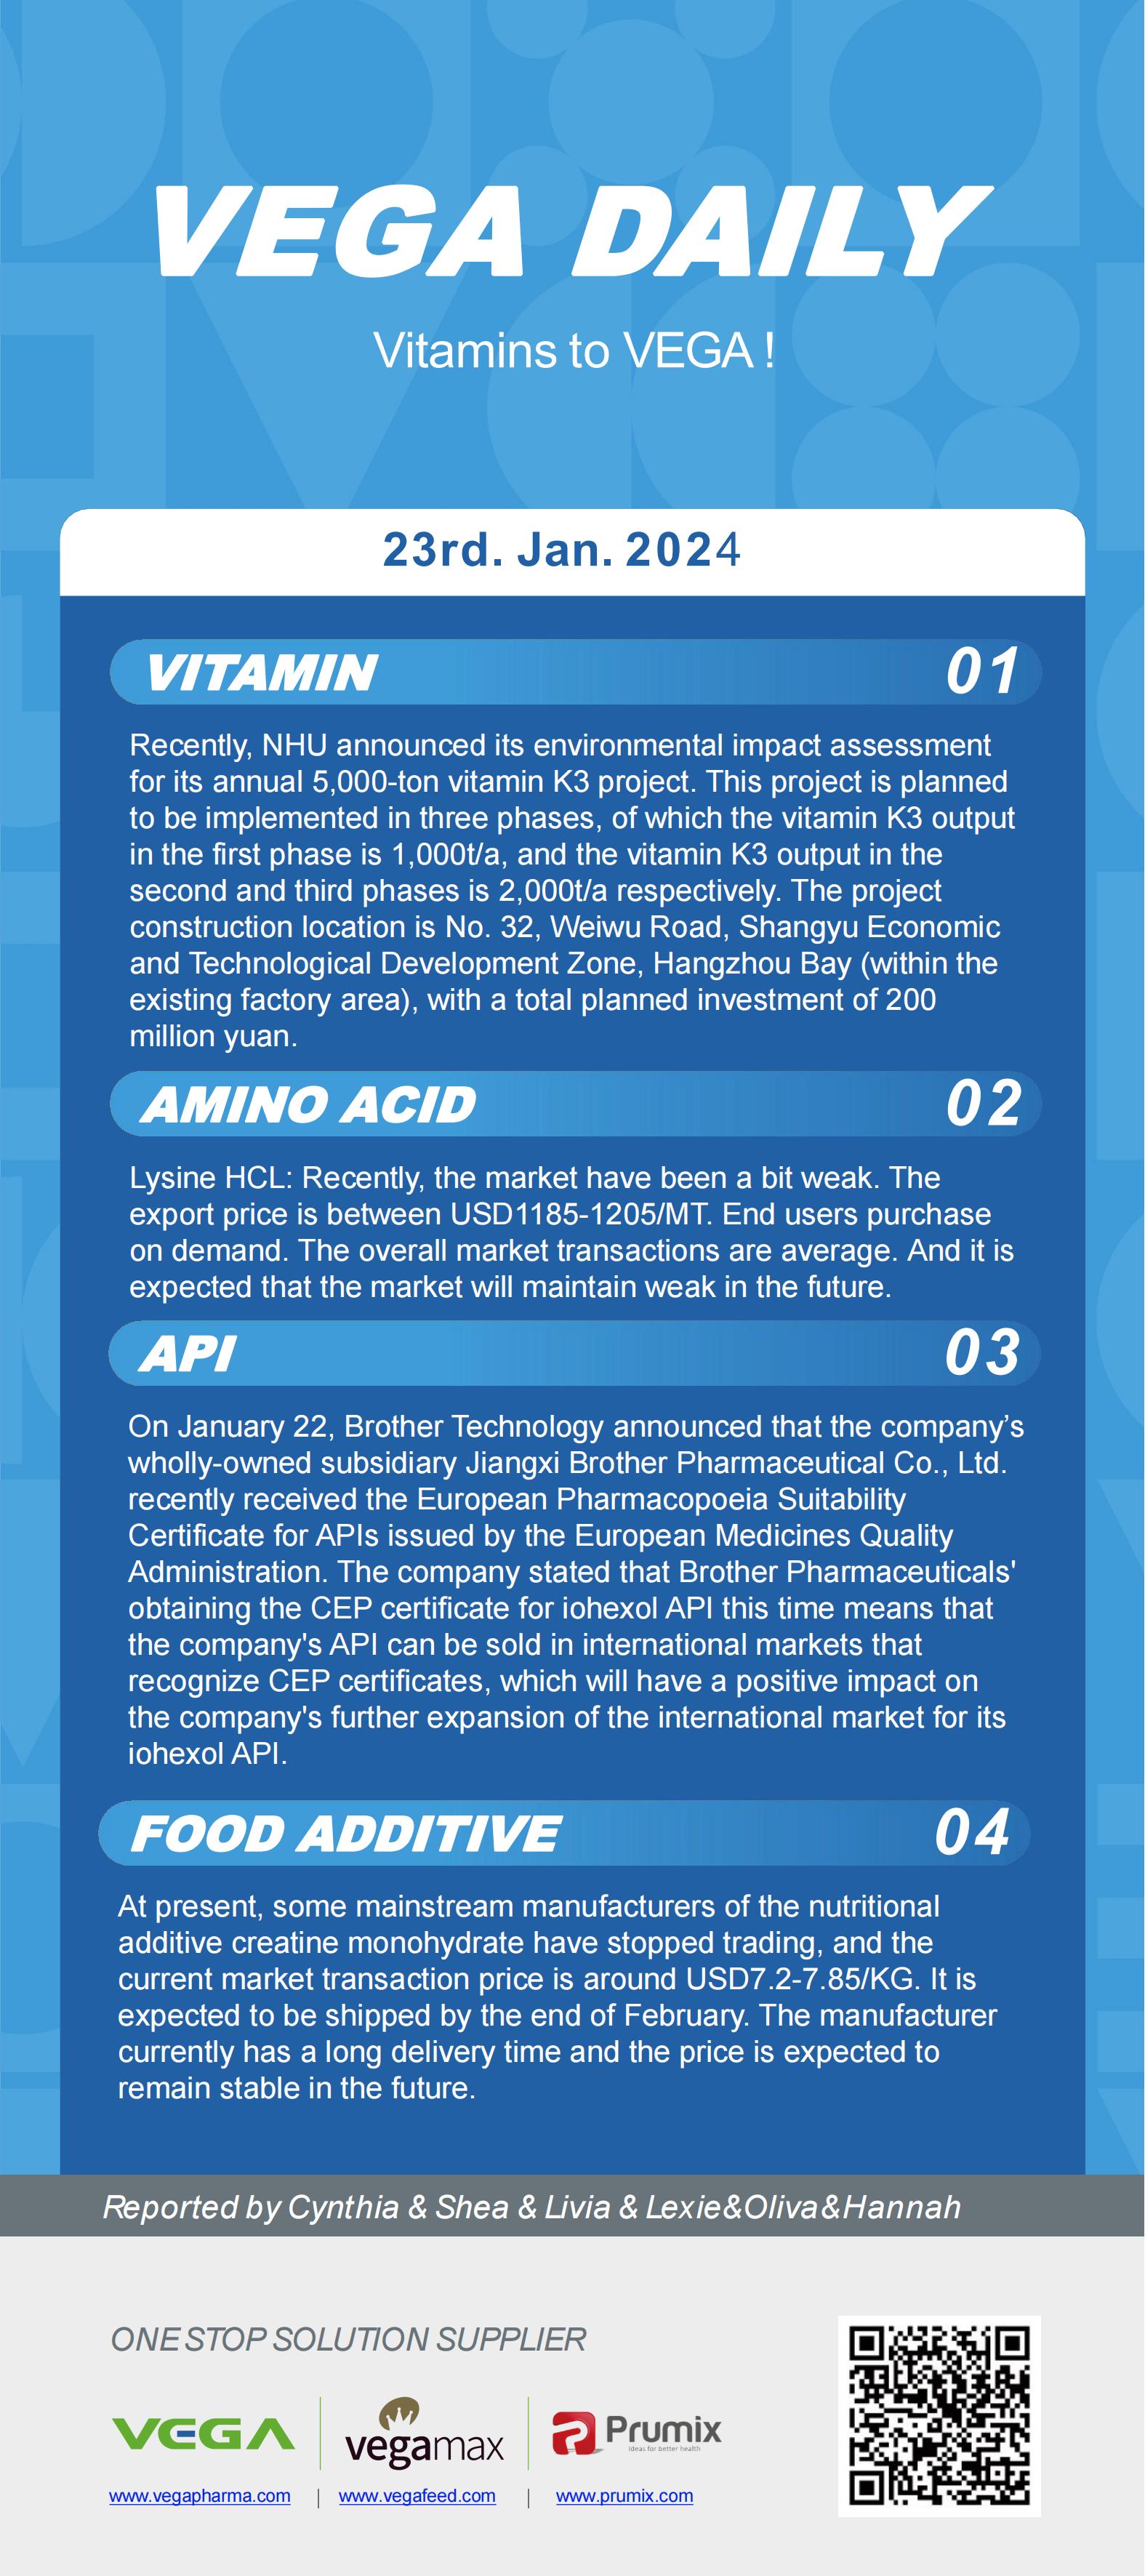 Vega Daily Dated on Jan 23rd 2024 Vitamin Amino Acid APl Food Additives.jpg